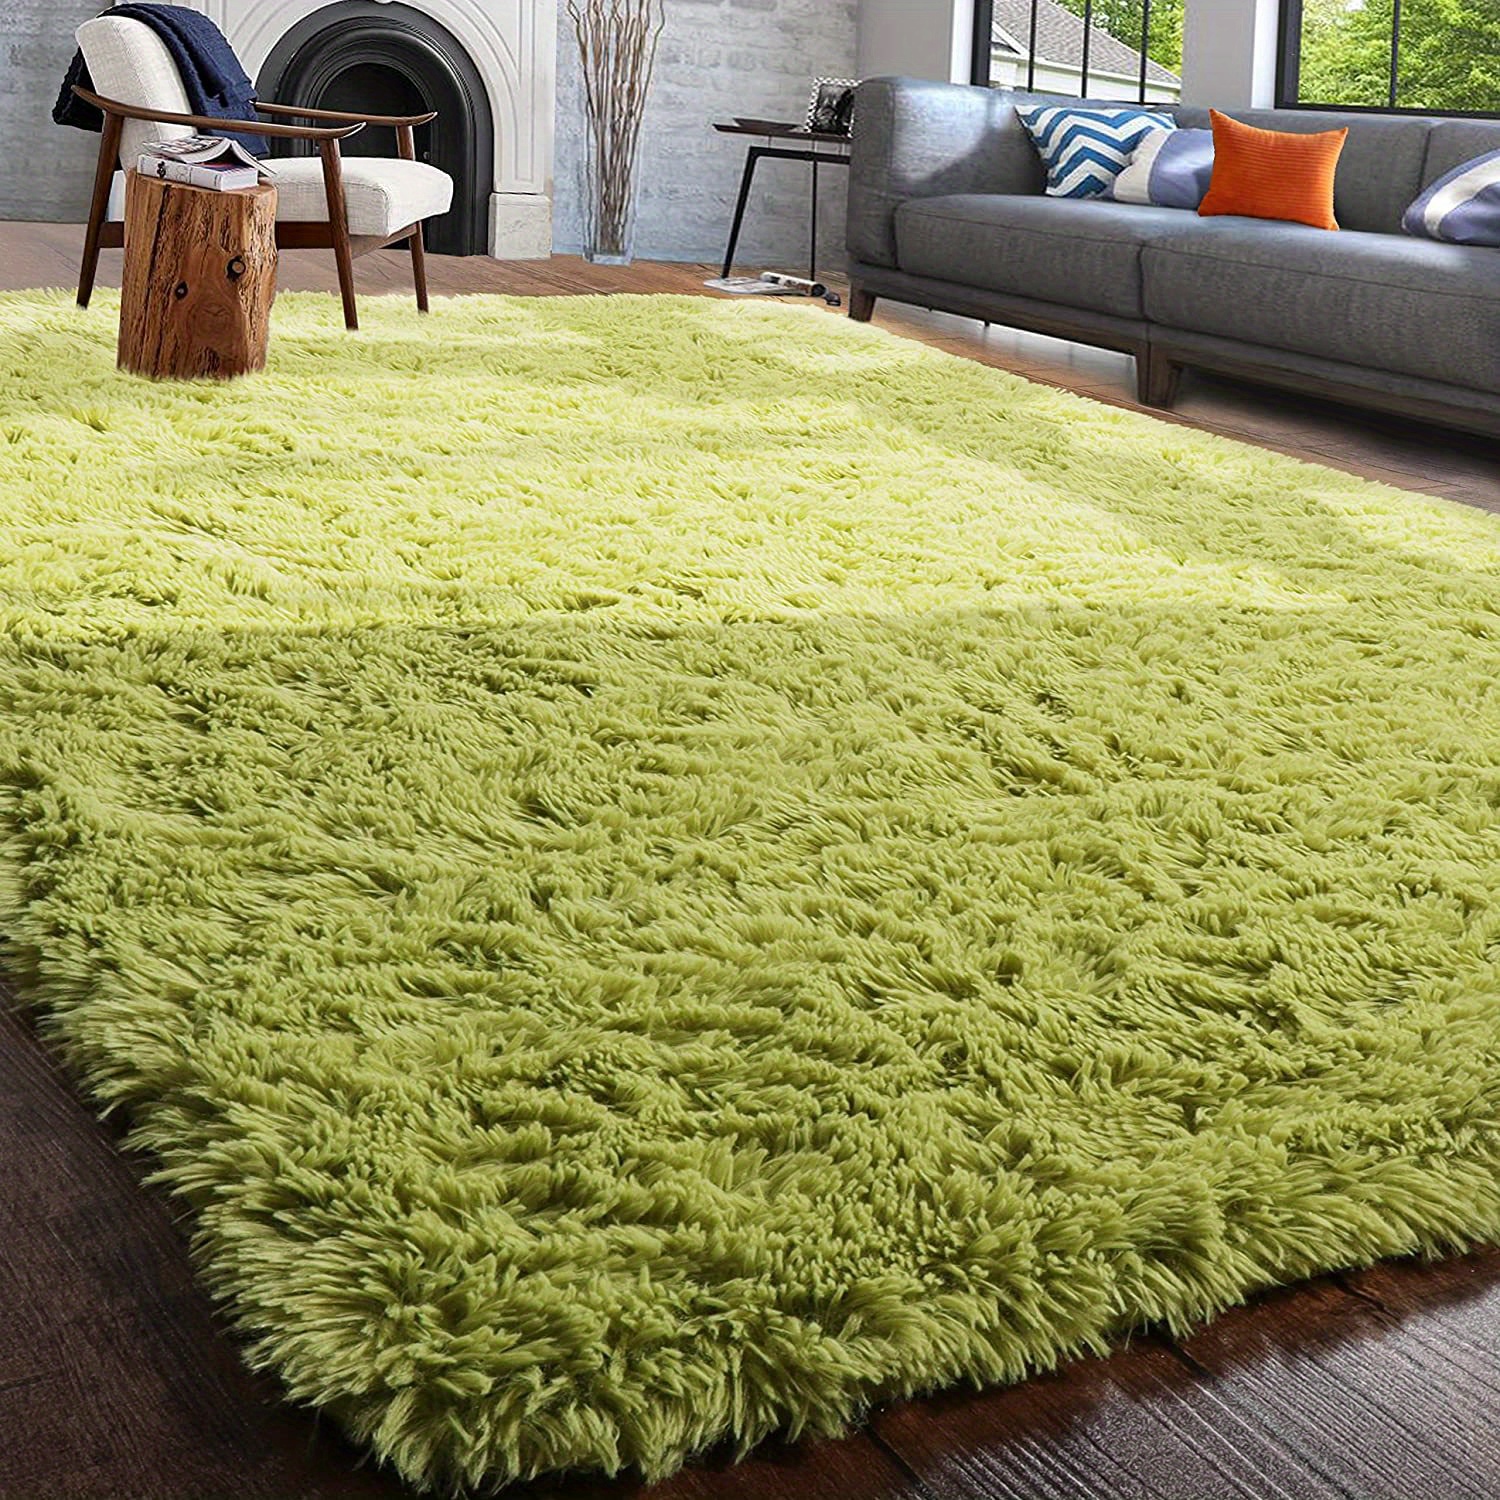 Home WET GRASS Rug Green Carpet Trend Home Plush Floor Furnishings